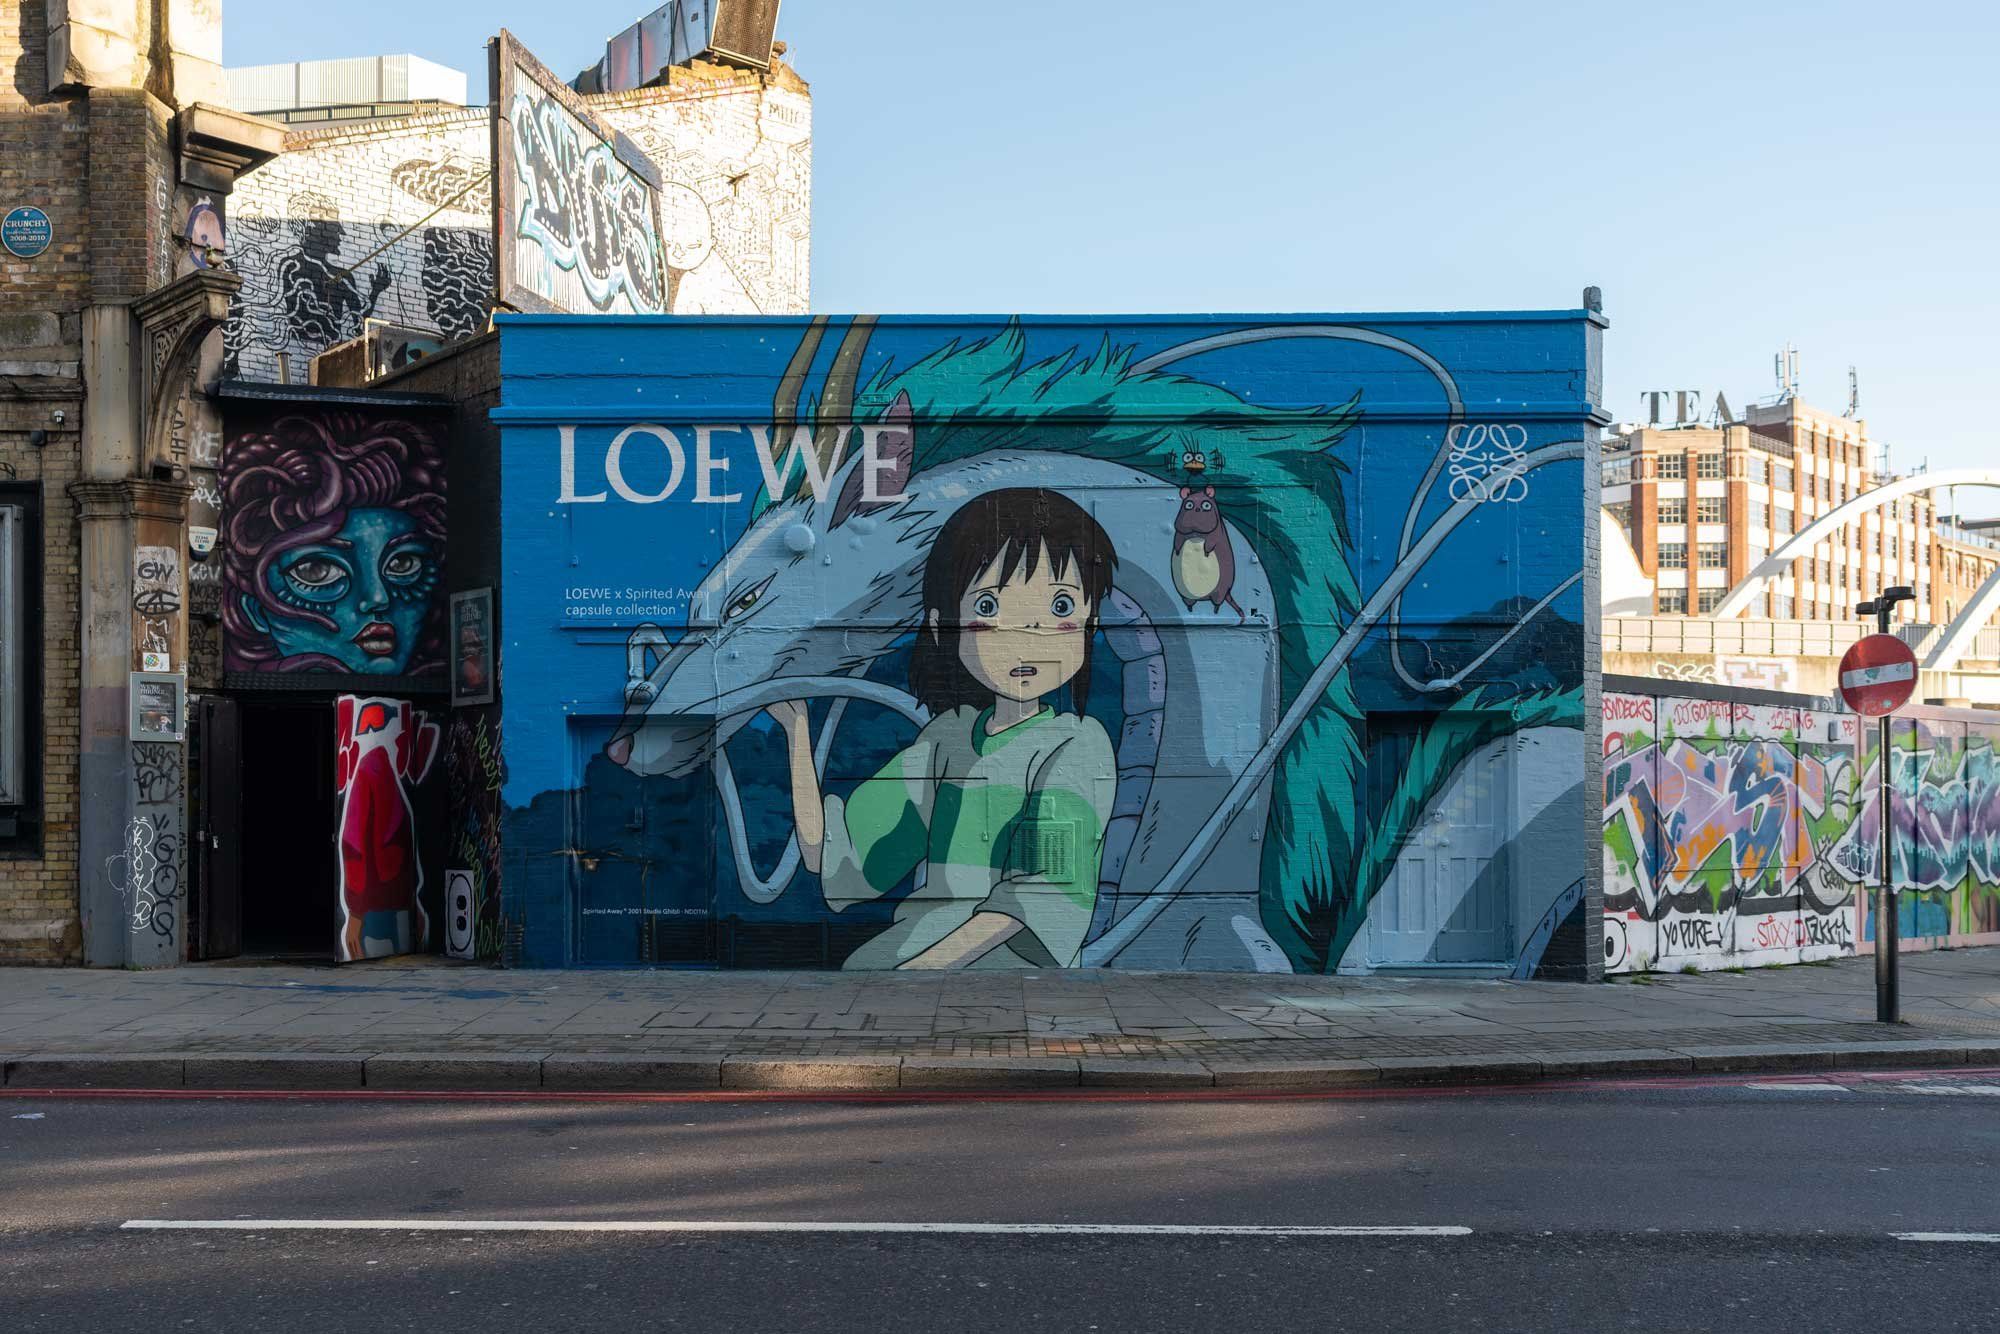 From Loewe to Swarovski, hand-painted murals get a luxury upgrade